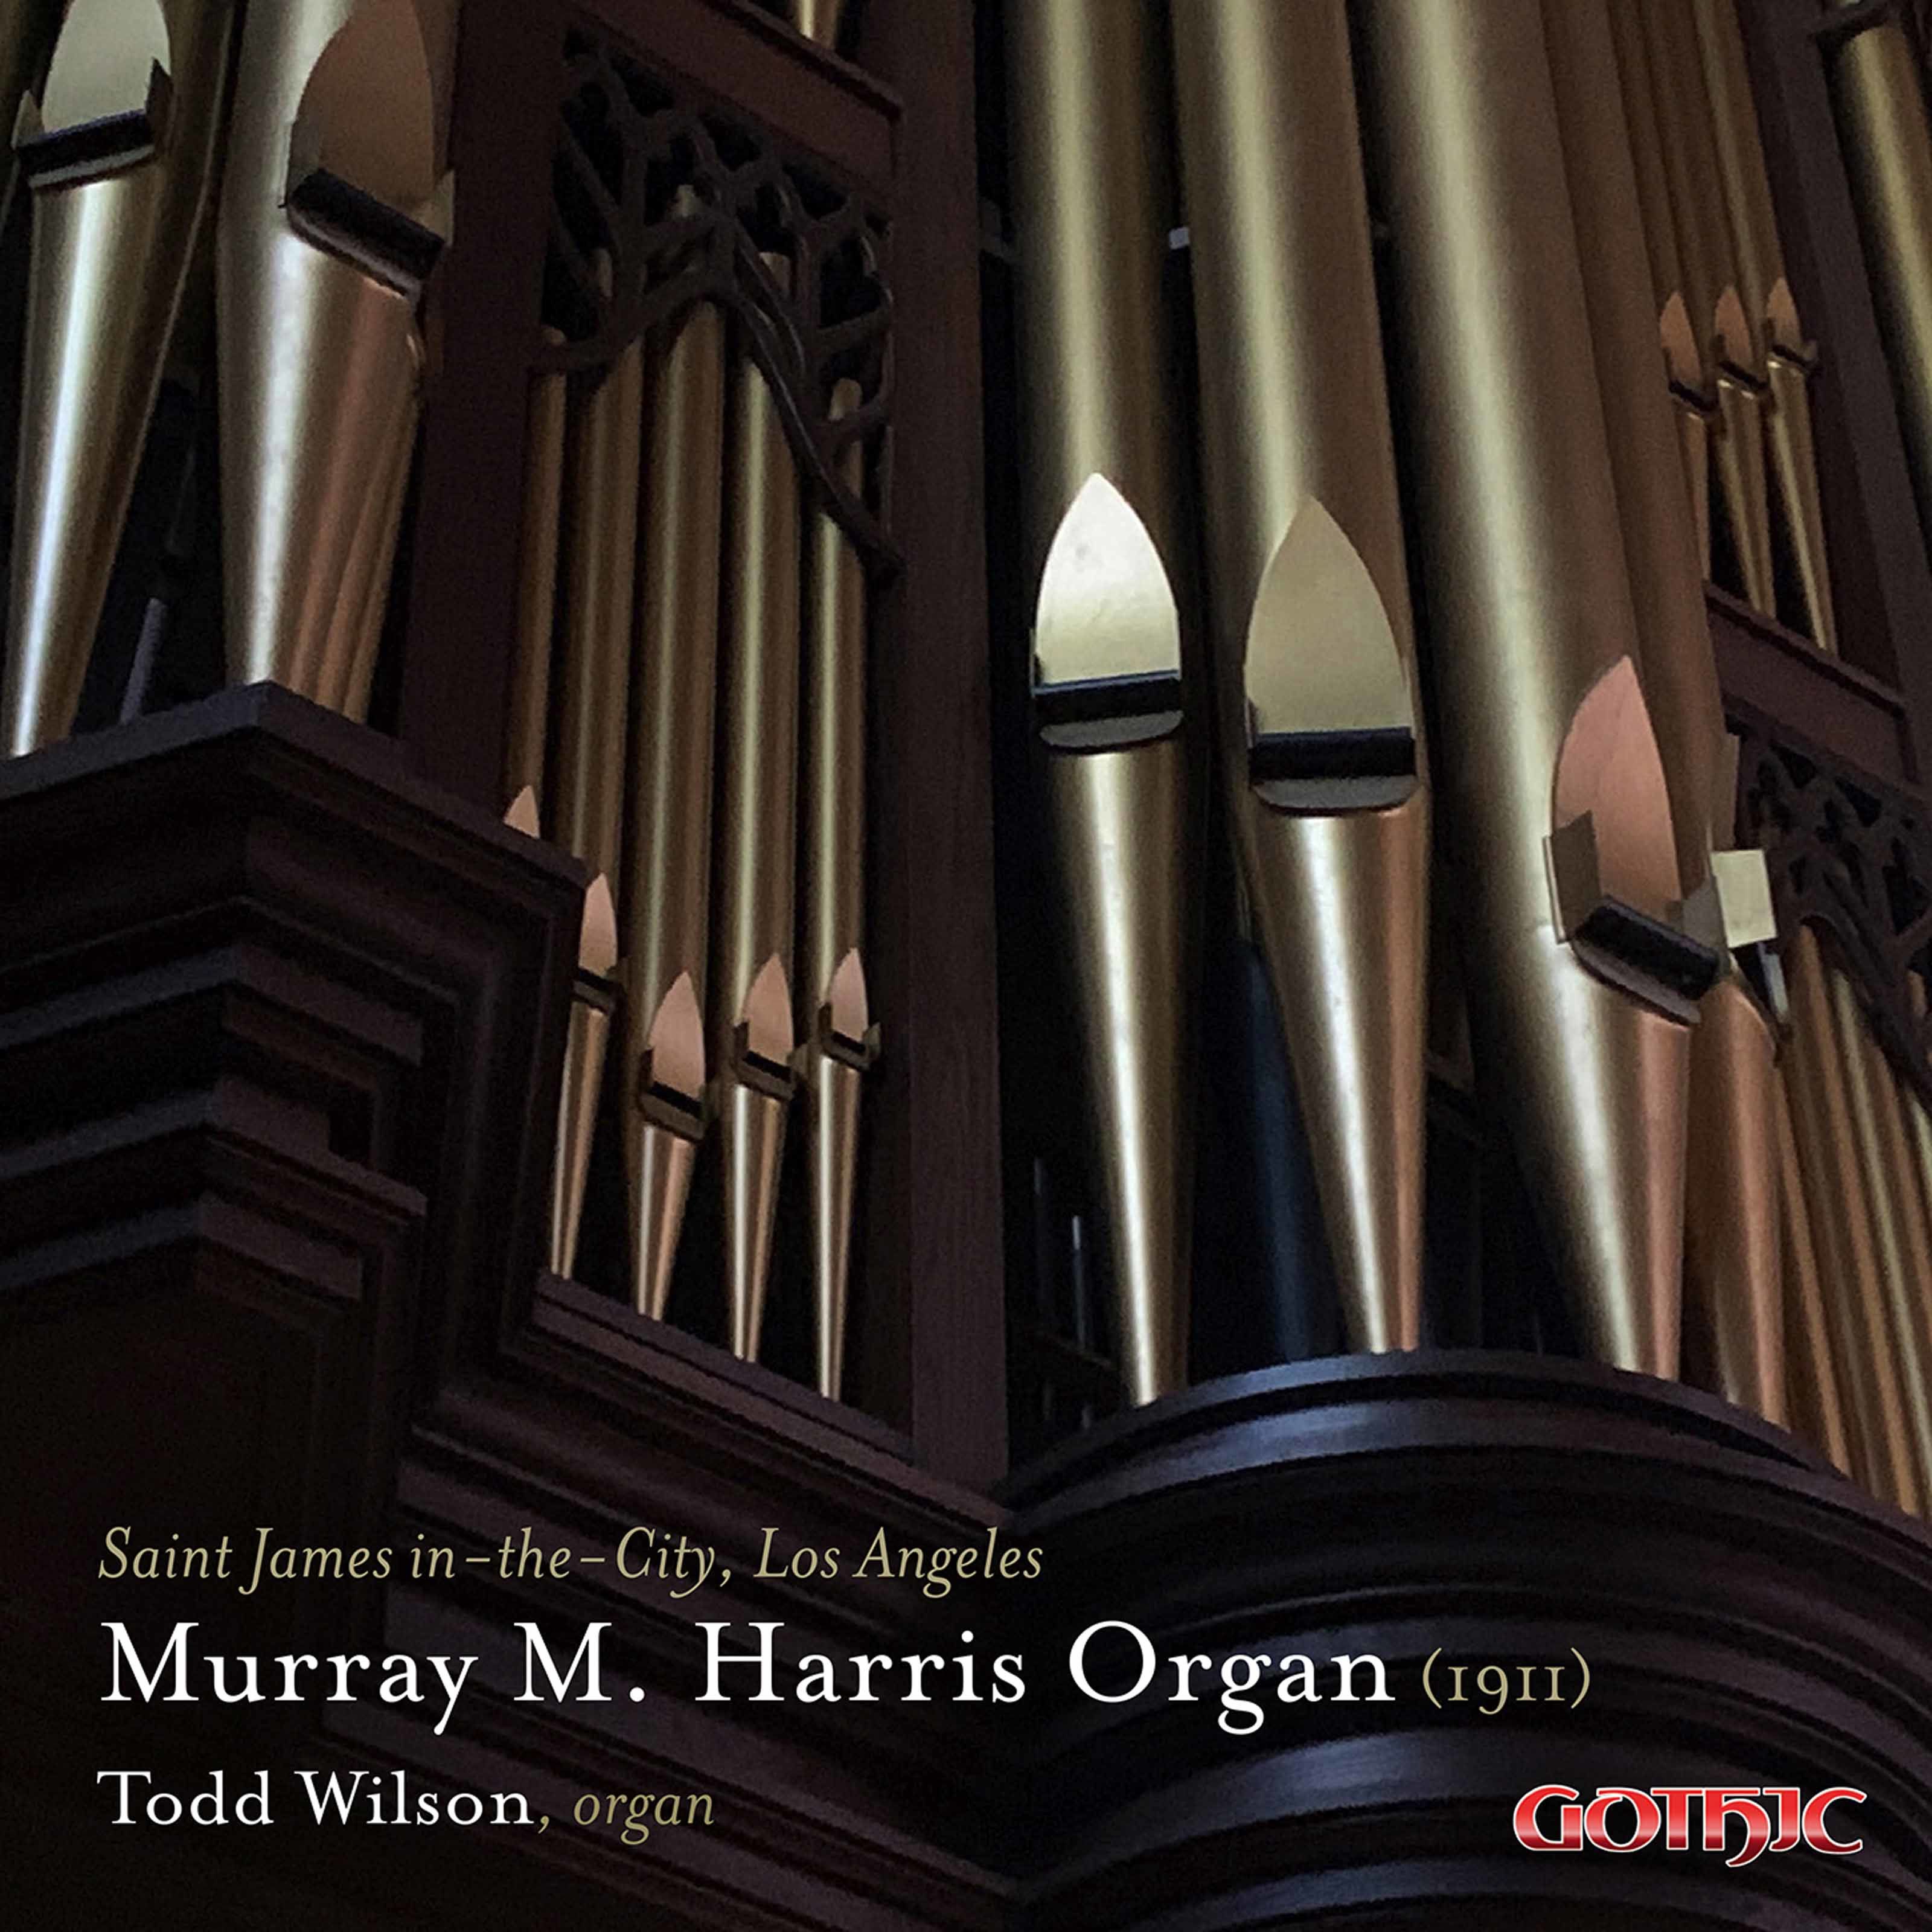 Todd Wilson – Murray M. Harris Organ (1911)